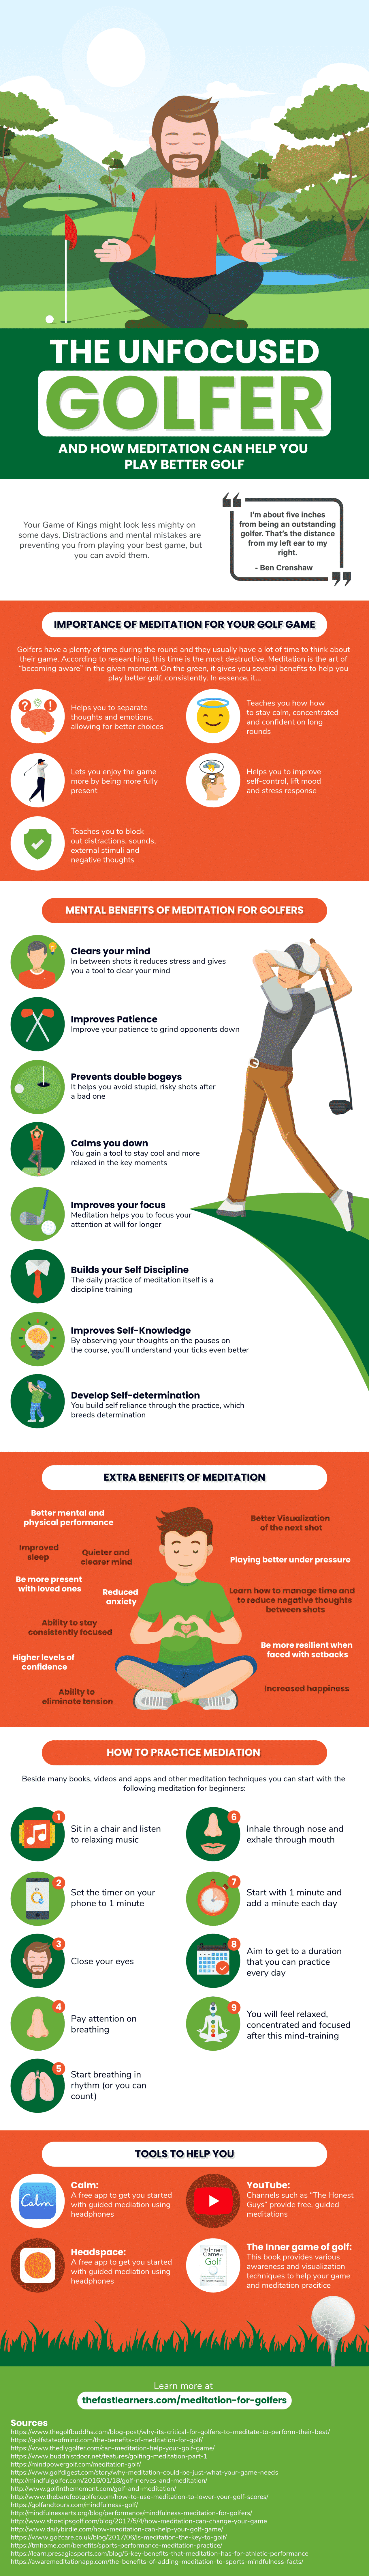 Golf Meditation and Mindfulness